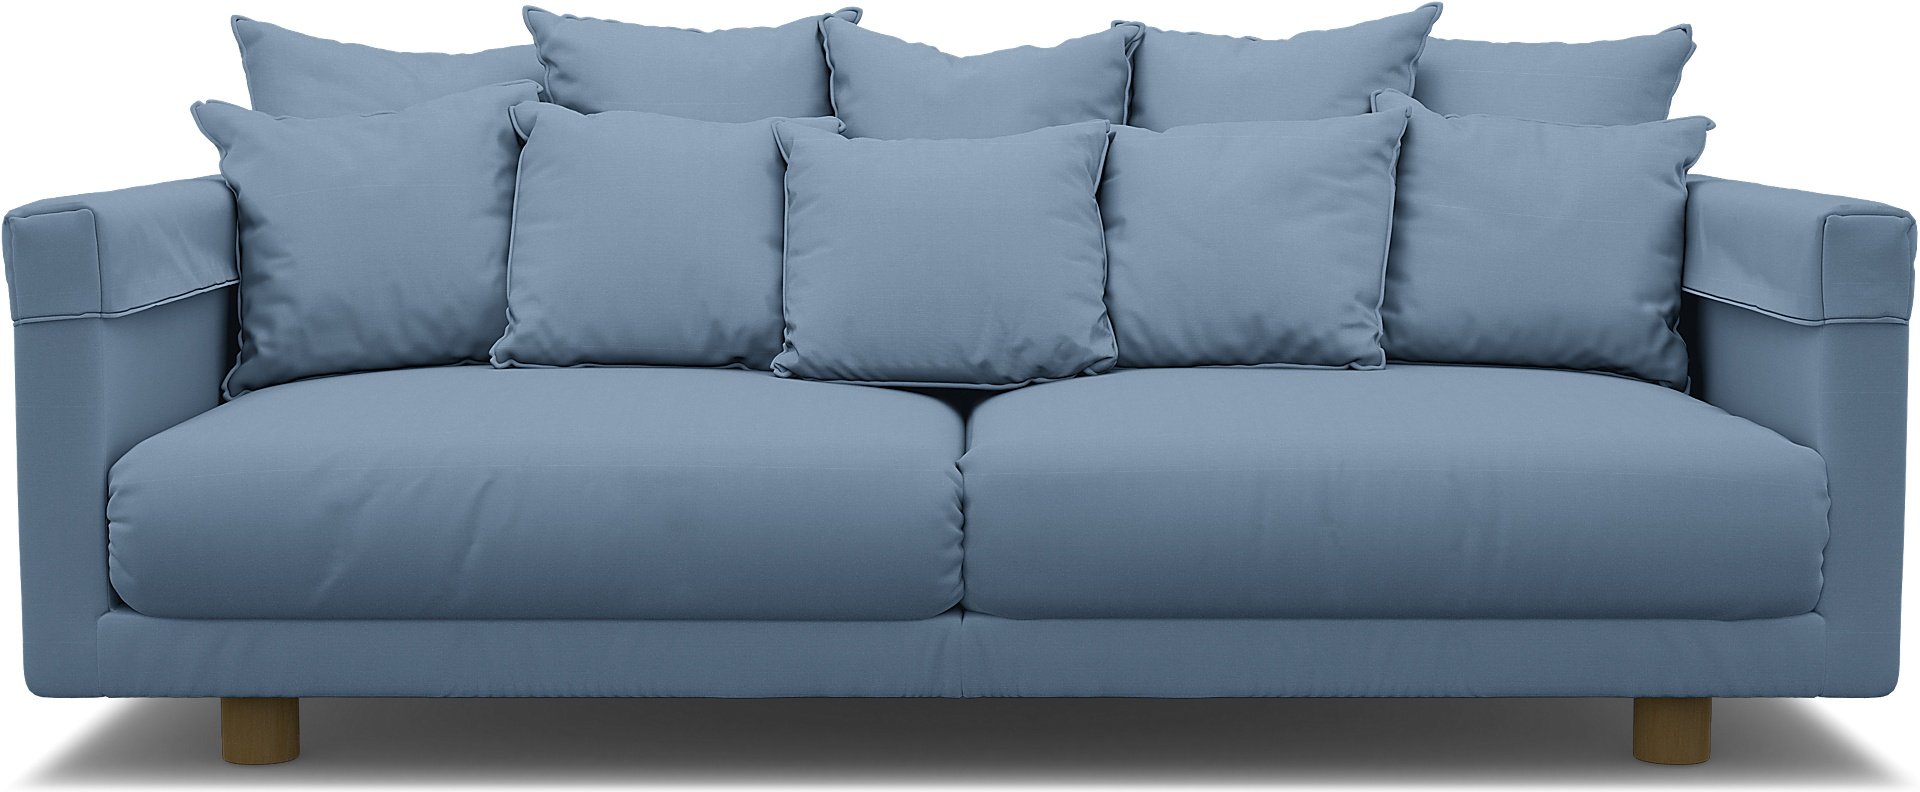 IKEA - Stockholm 2017 3 Seater Sofa Cover, Dusty Blue, Cotton - Bemz